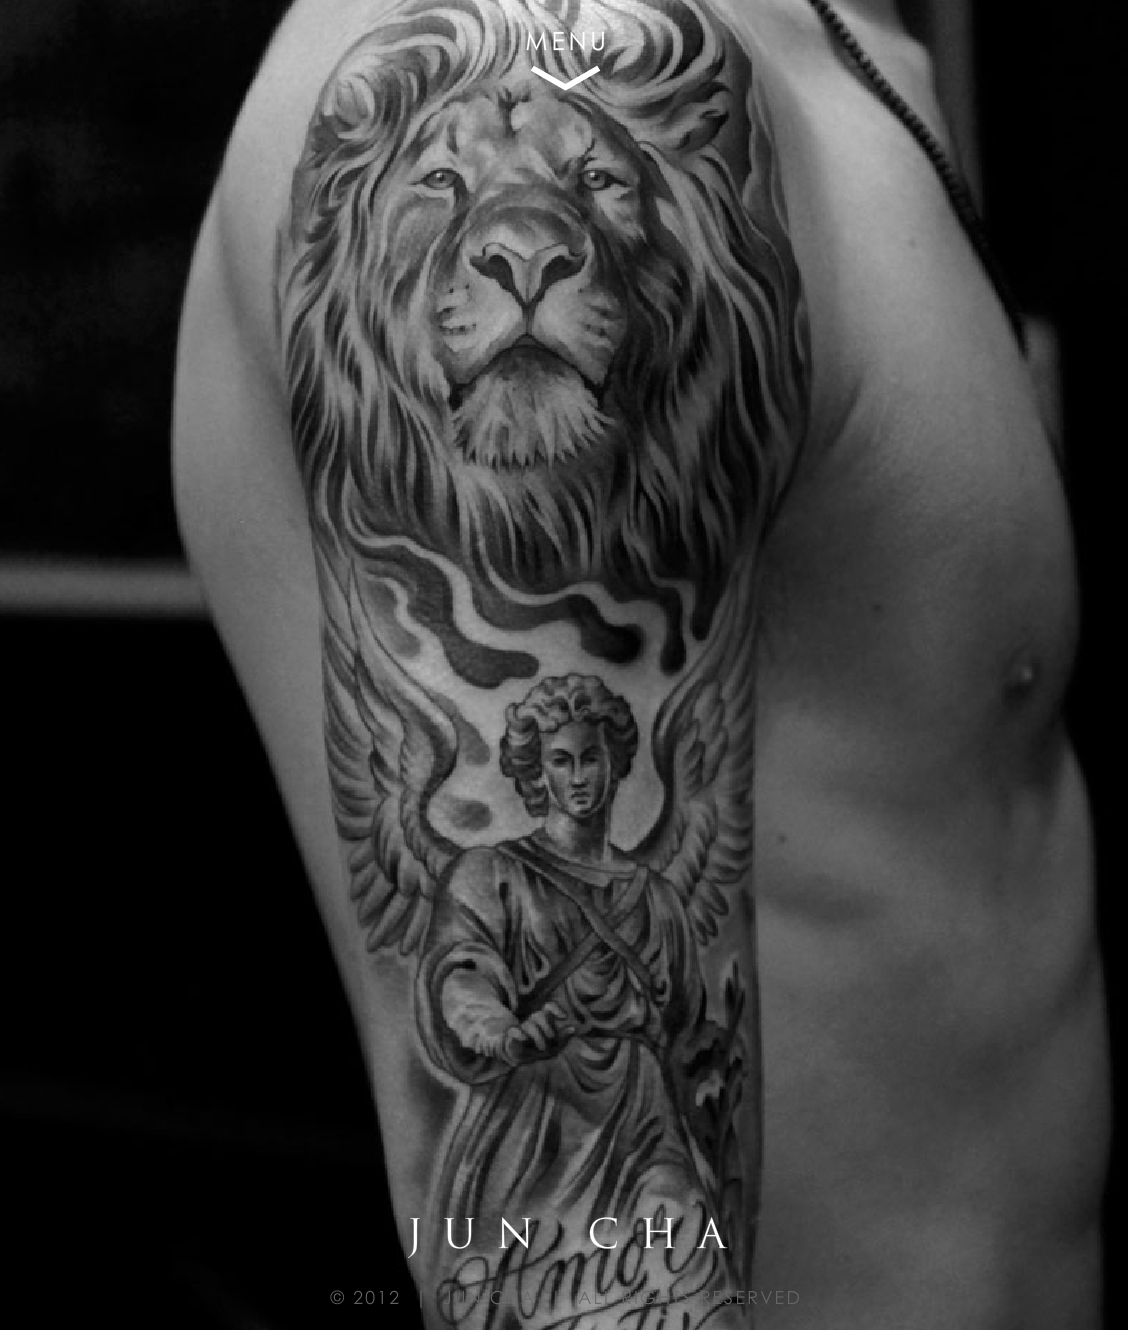 Jun Cha Artwork Love The Serious Lion Great For Scottish regarding size 1128 X 1330